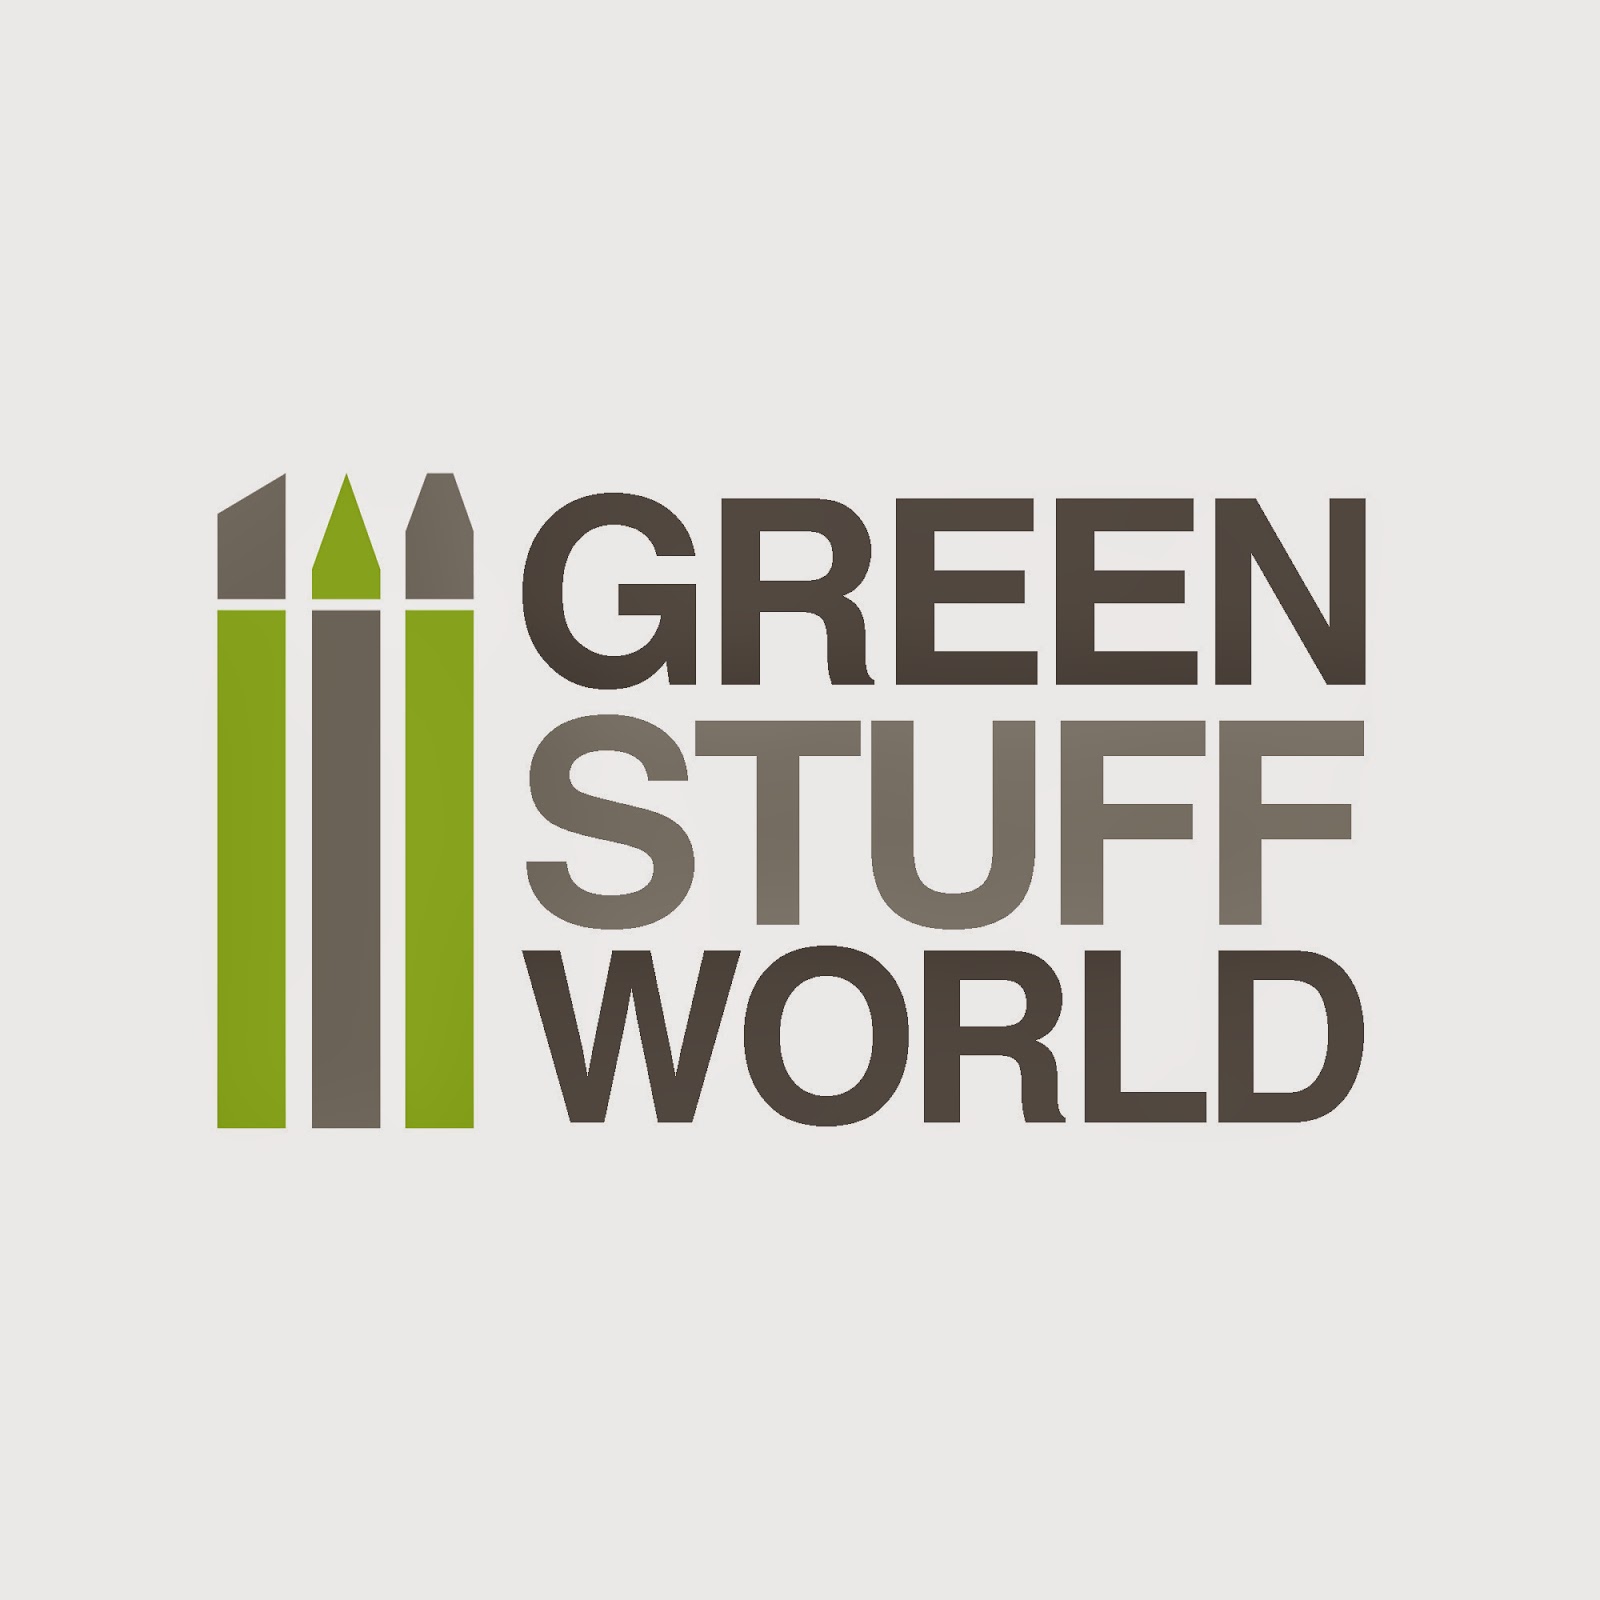 I Jornadas de pintura Pintochio Logo+greenstuff+world